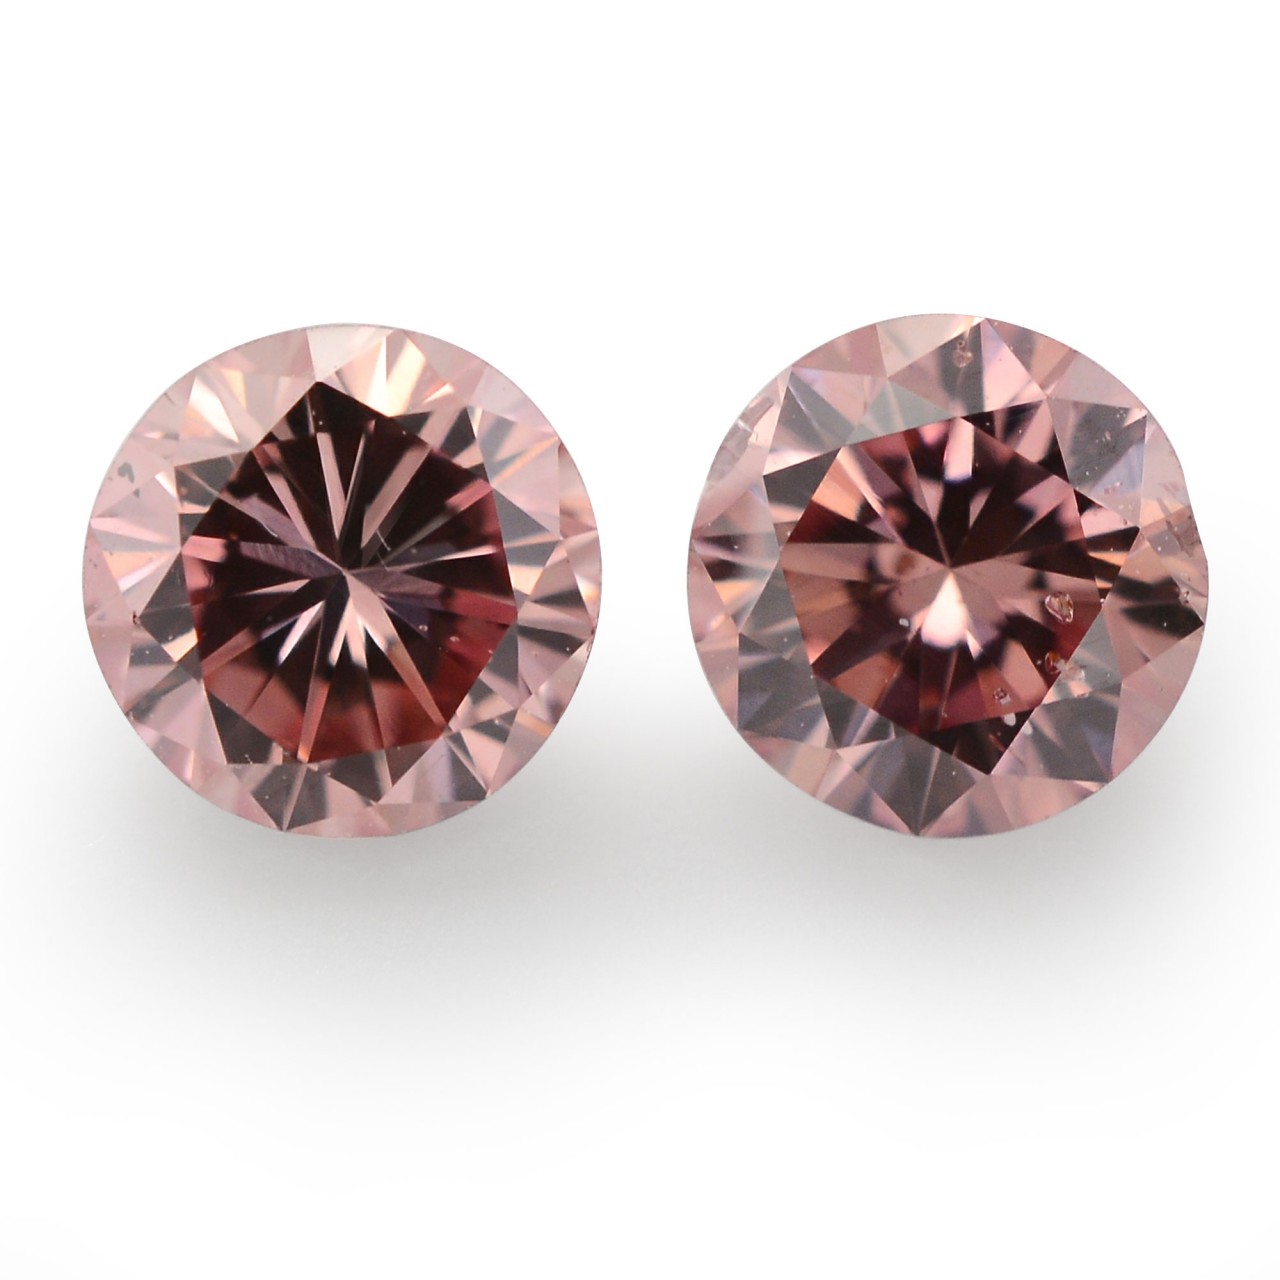 0.50 carat, Fancy Intense Pink Diamonds, Round Shape, I1 Clarity